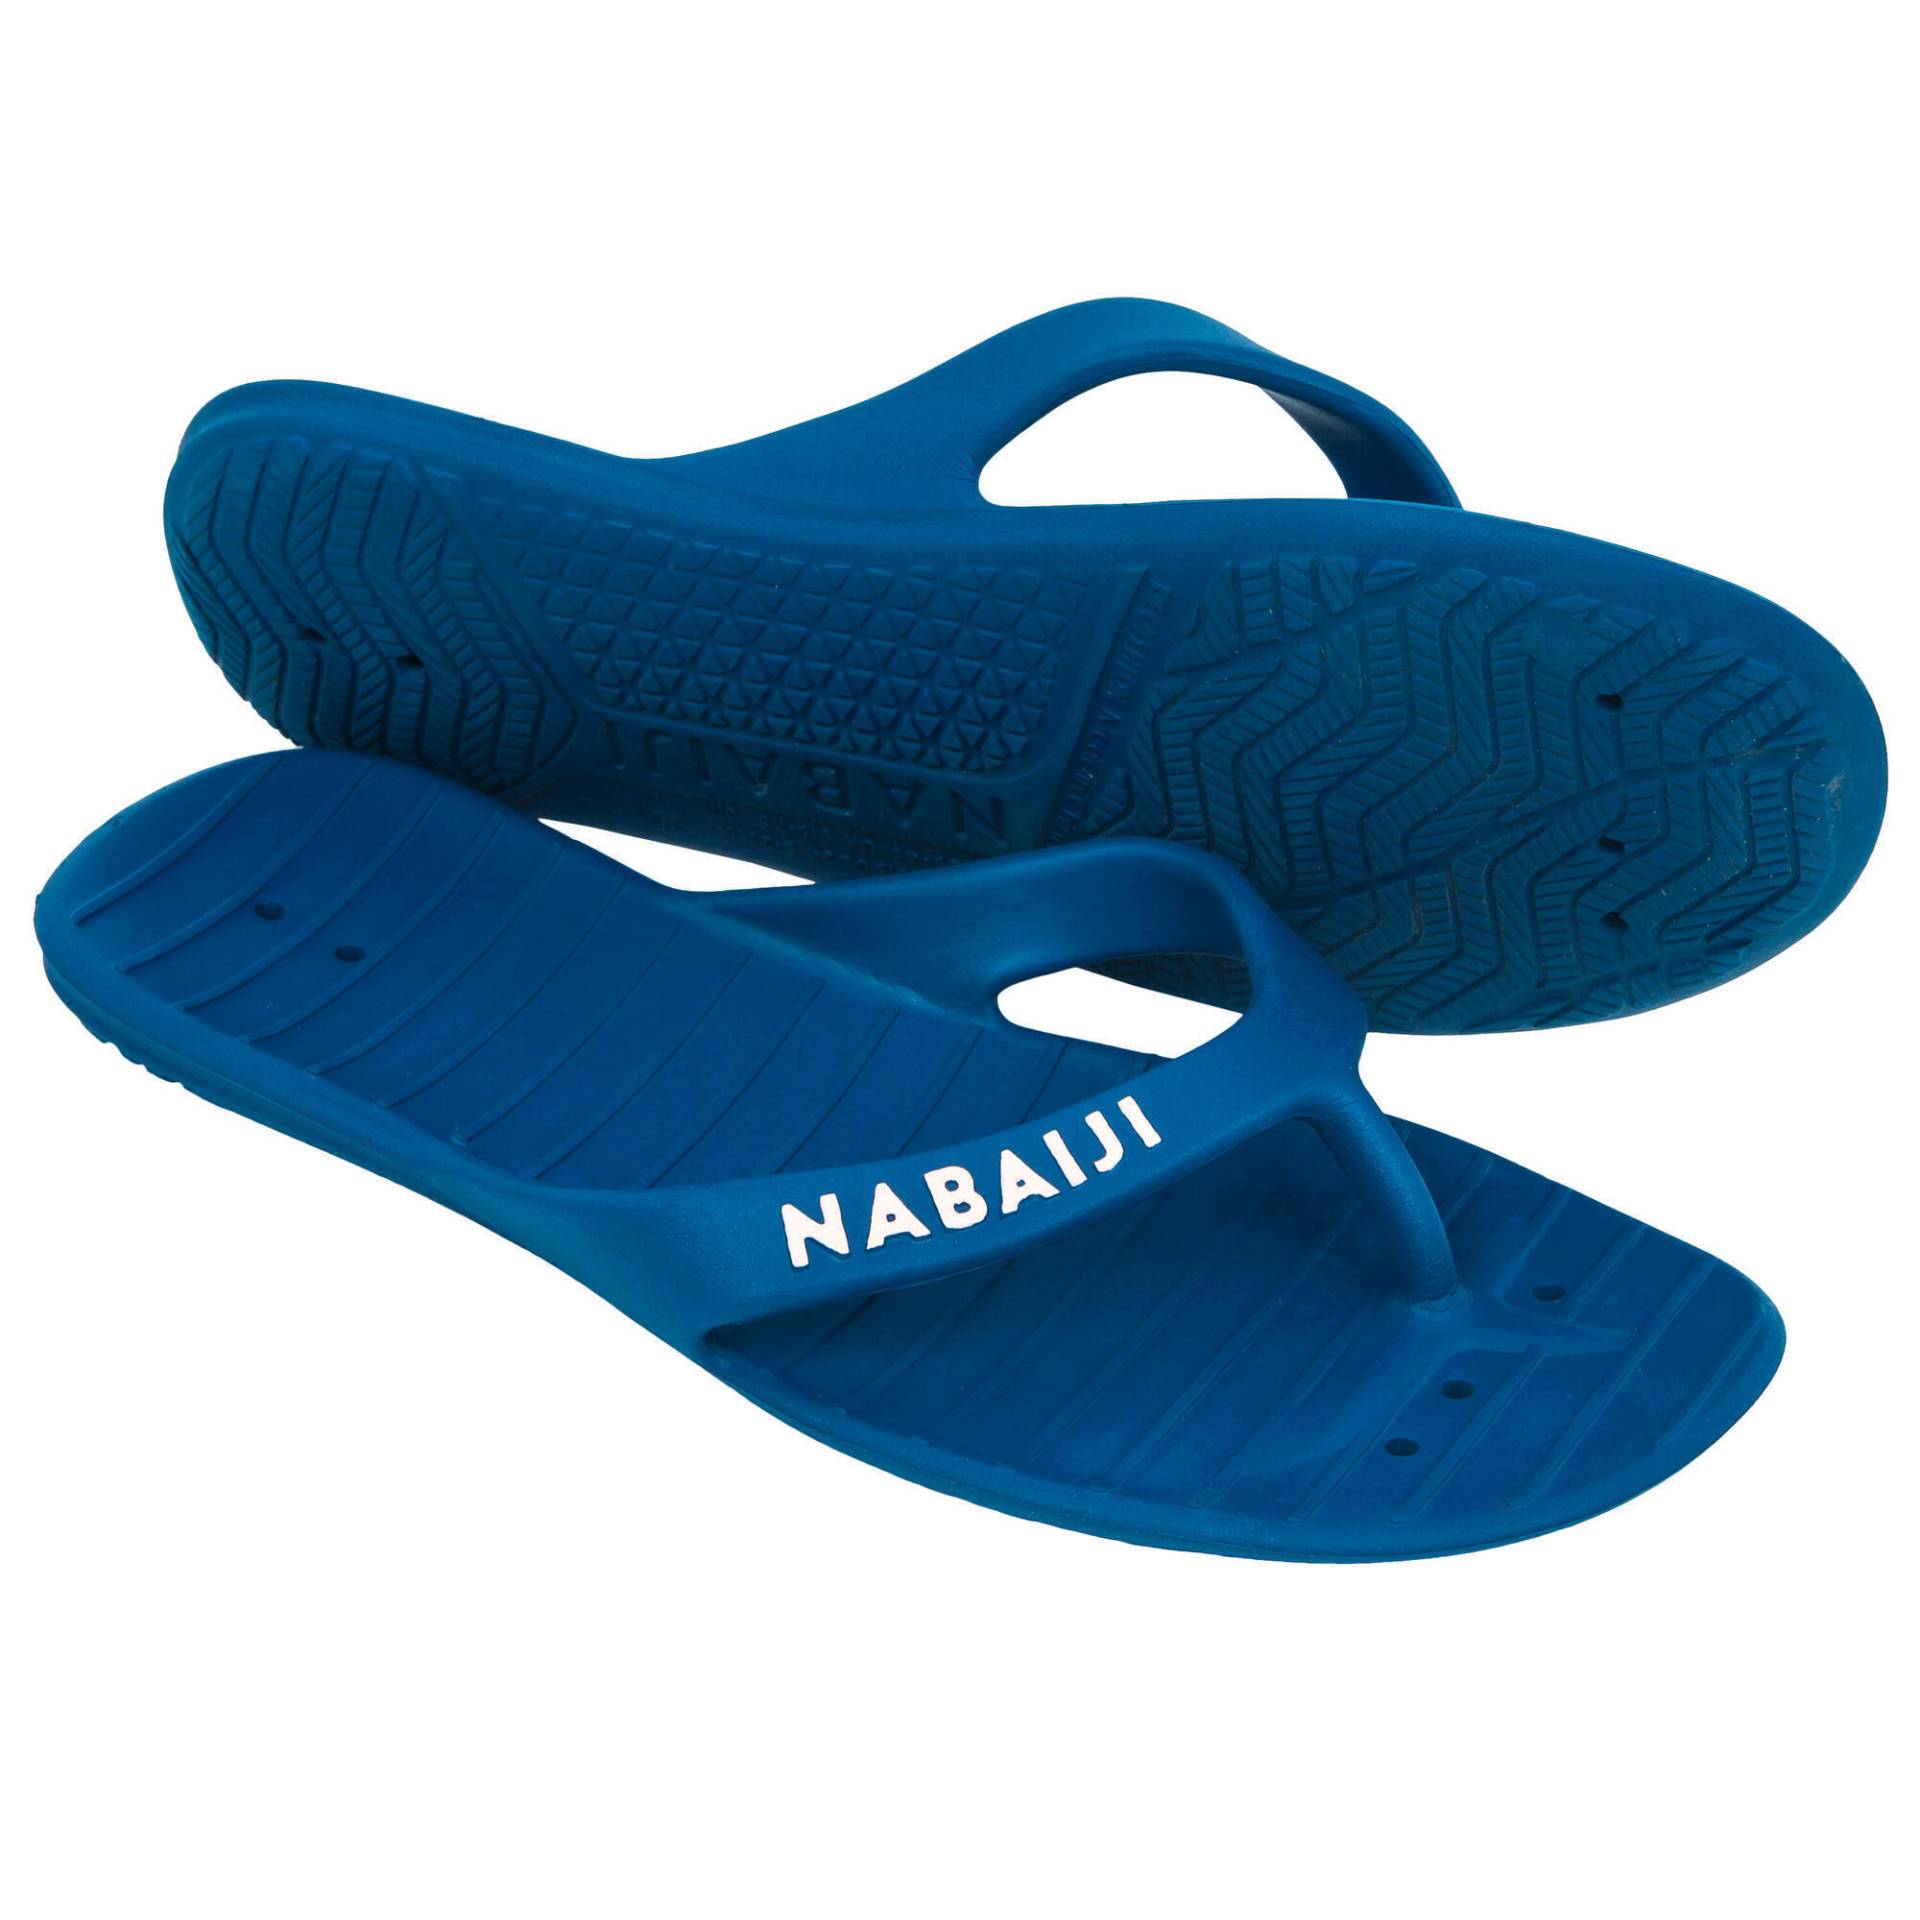 Badelatschen Damen - Tonga 100 Basic blau von NABAIJI